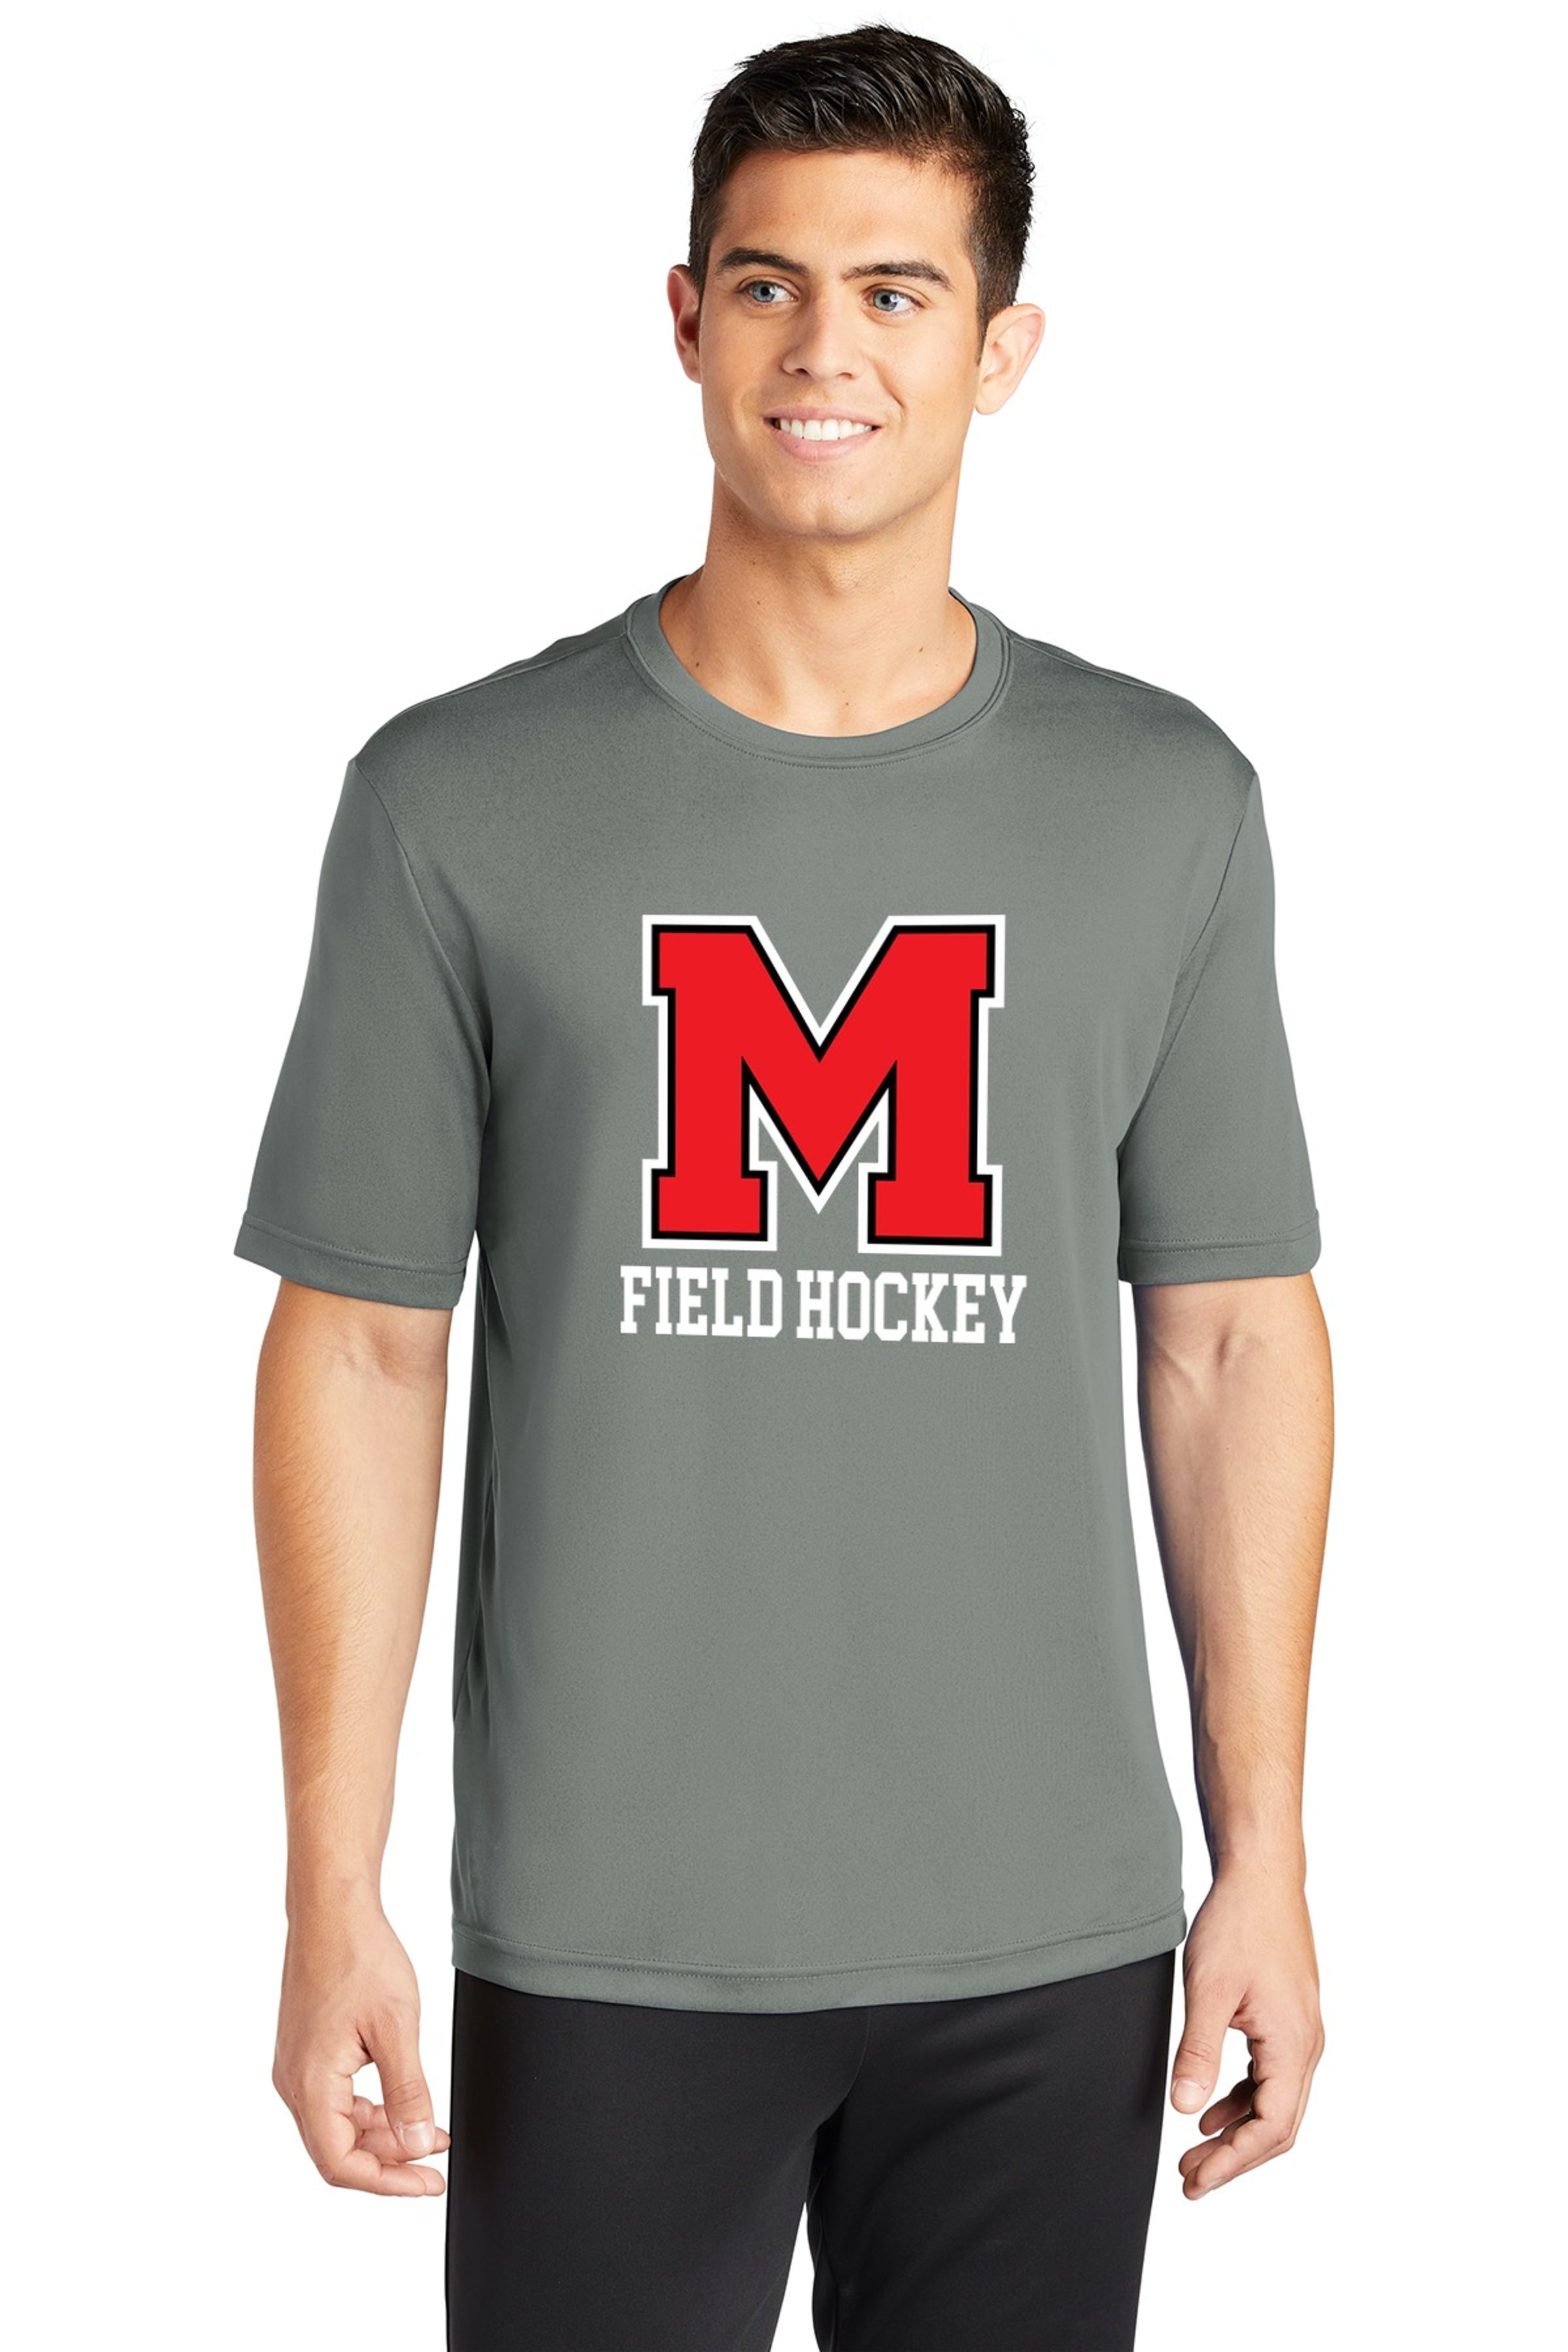 MHS Field Hockey Short Sleeve Performance Shirt